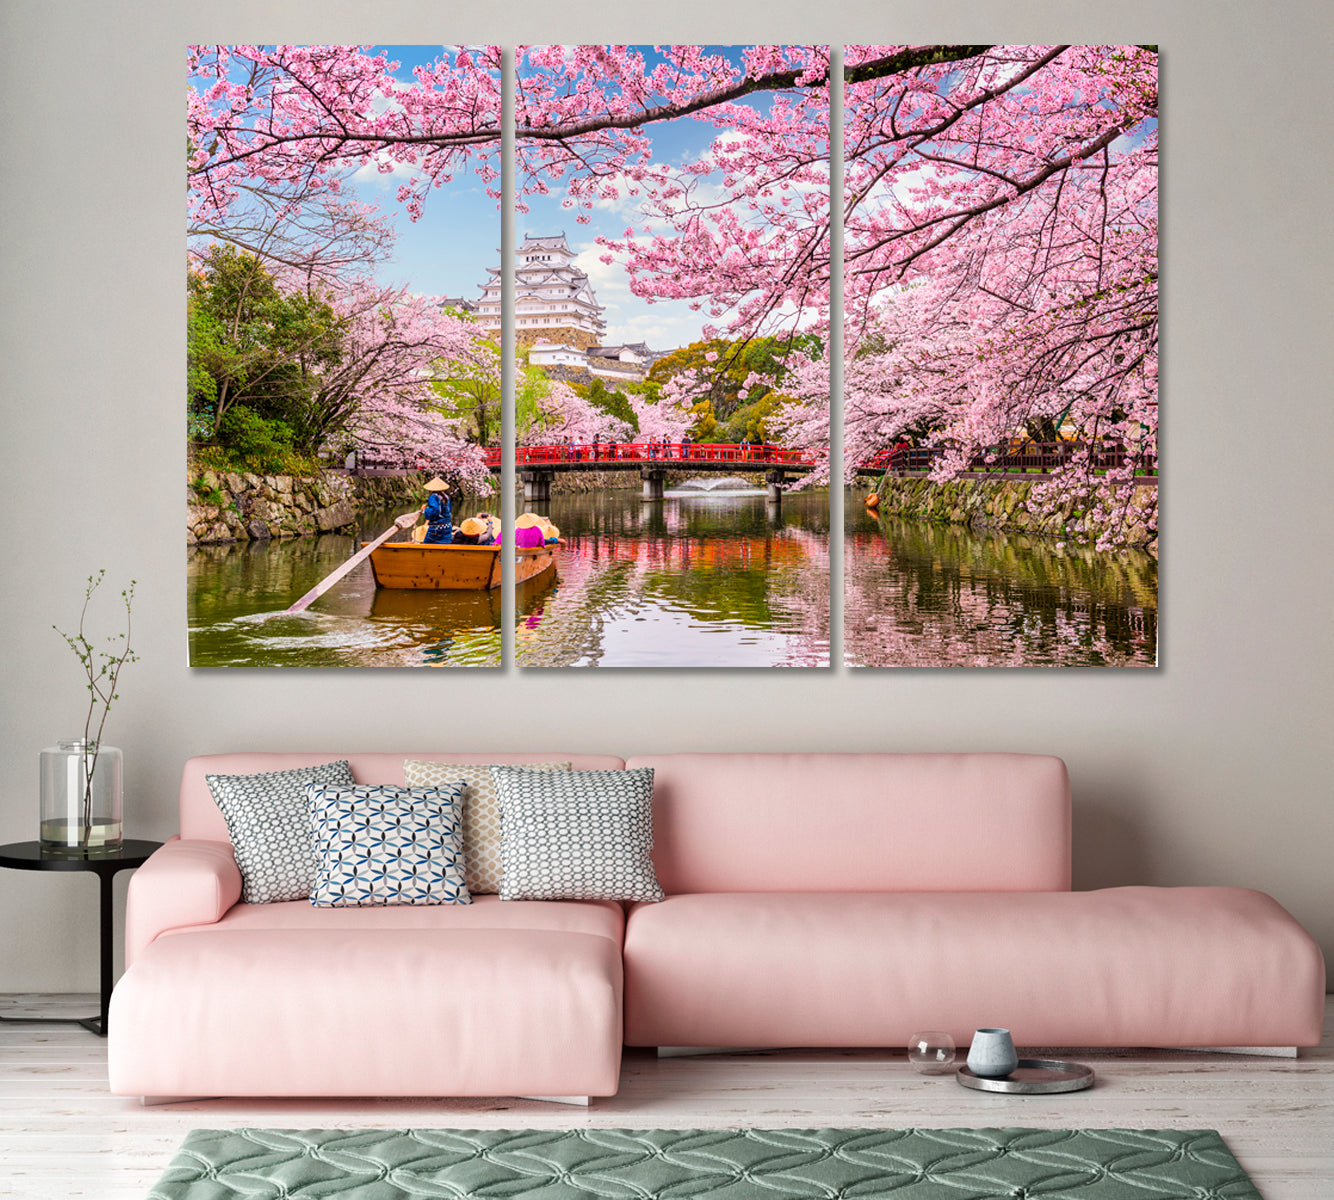 Himeji Castle and Cherry Blossom Season Japan Canvas Print-Canvas Print-CetArt-1 Panel-24x16 inches-CetArt